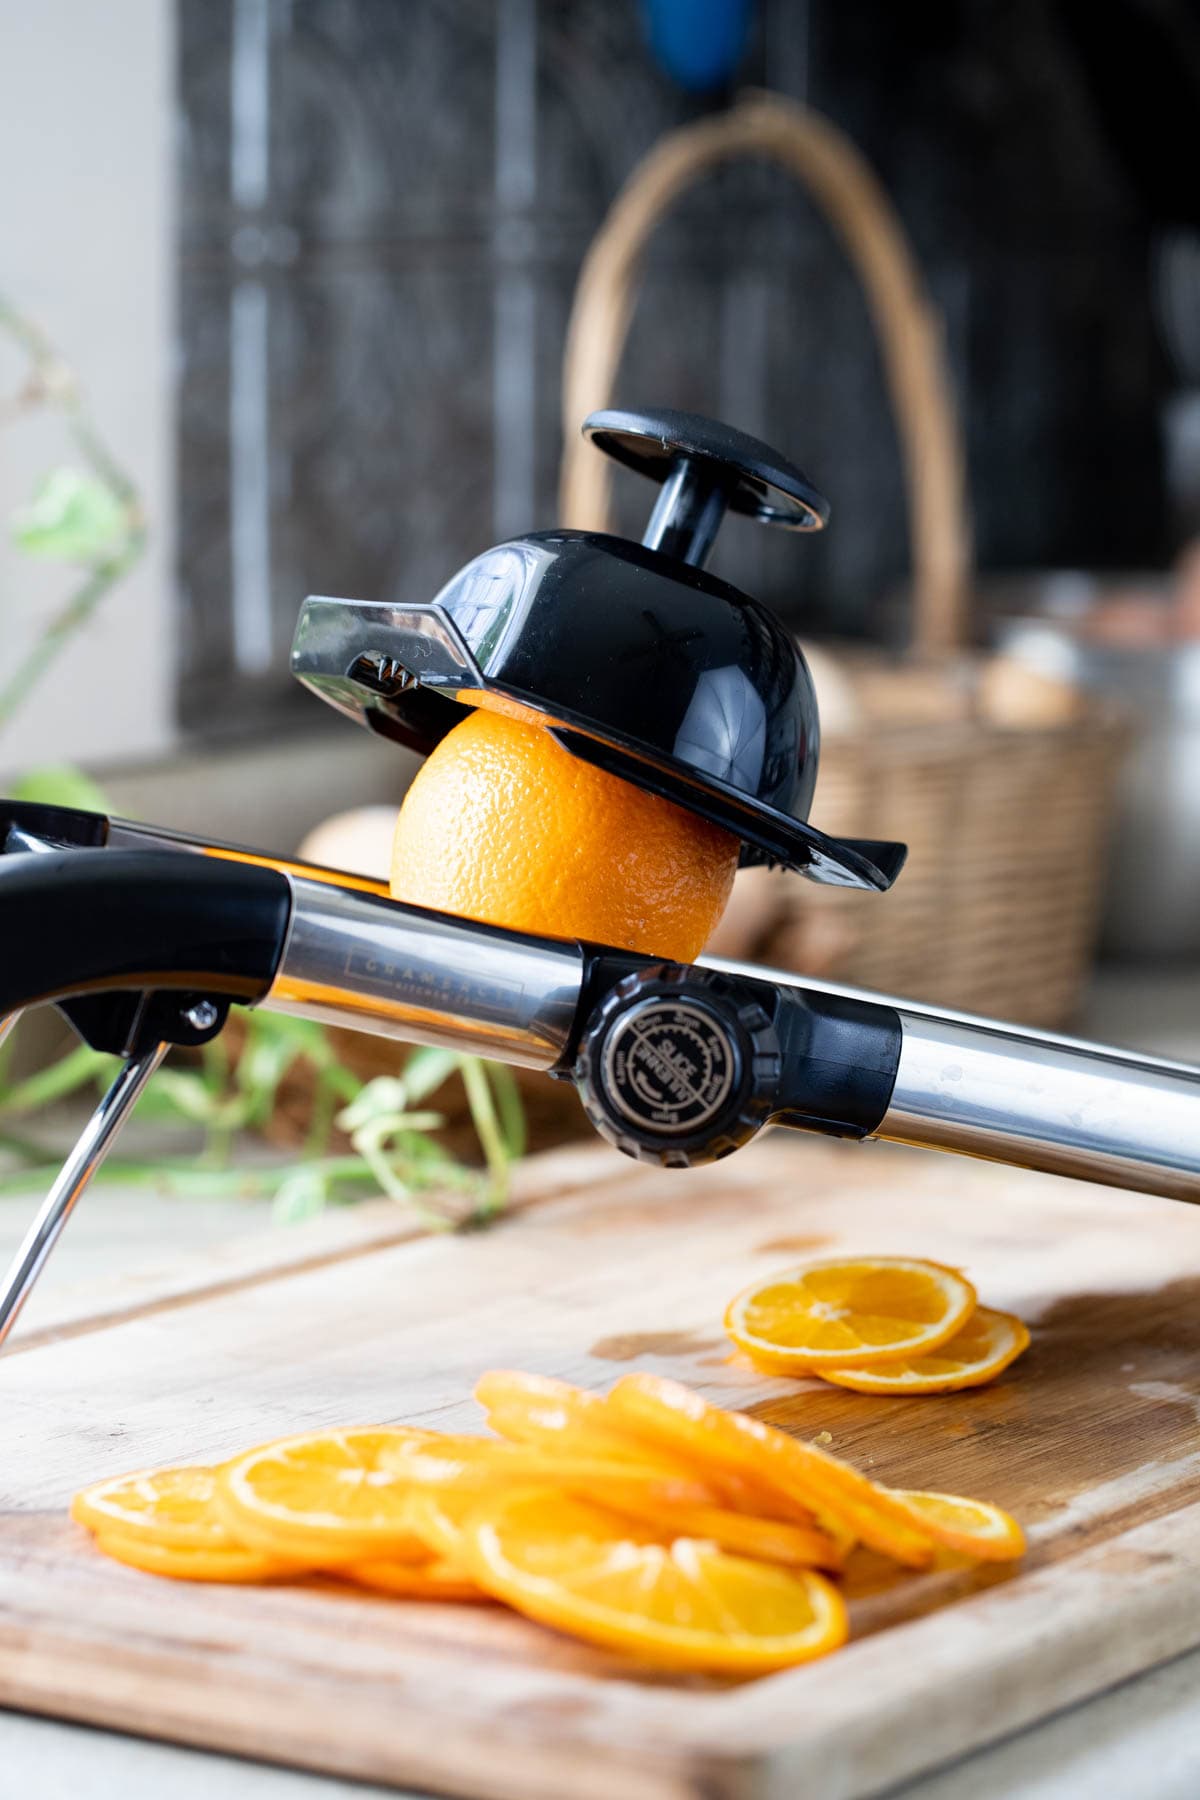 using a kitchen mandolin to slice the oranges